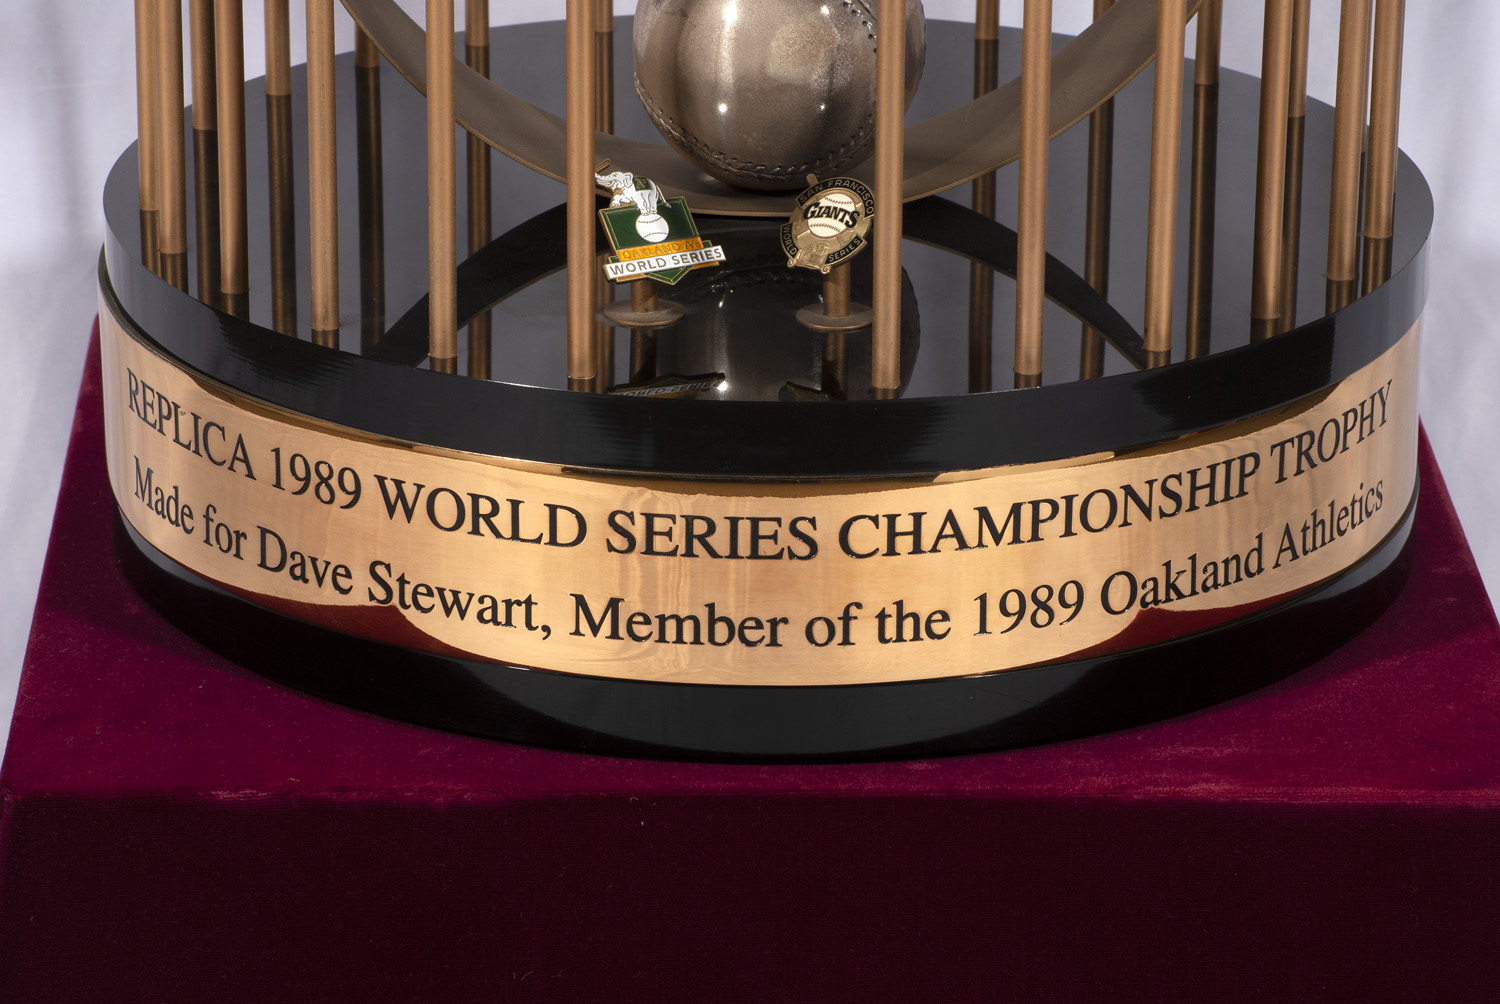 Woolworth's 1989 ATHLETICS 25 1989 Dave Stewart Baseball 